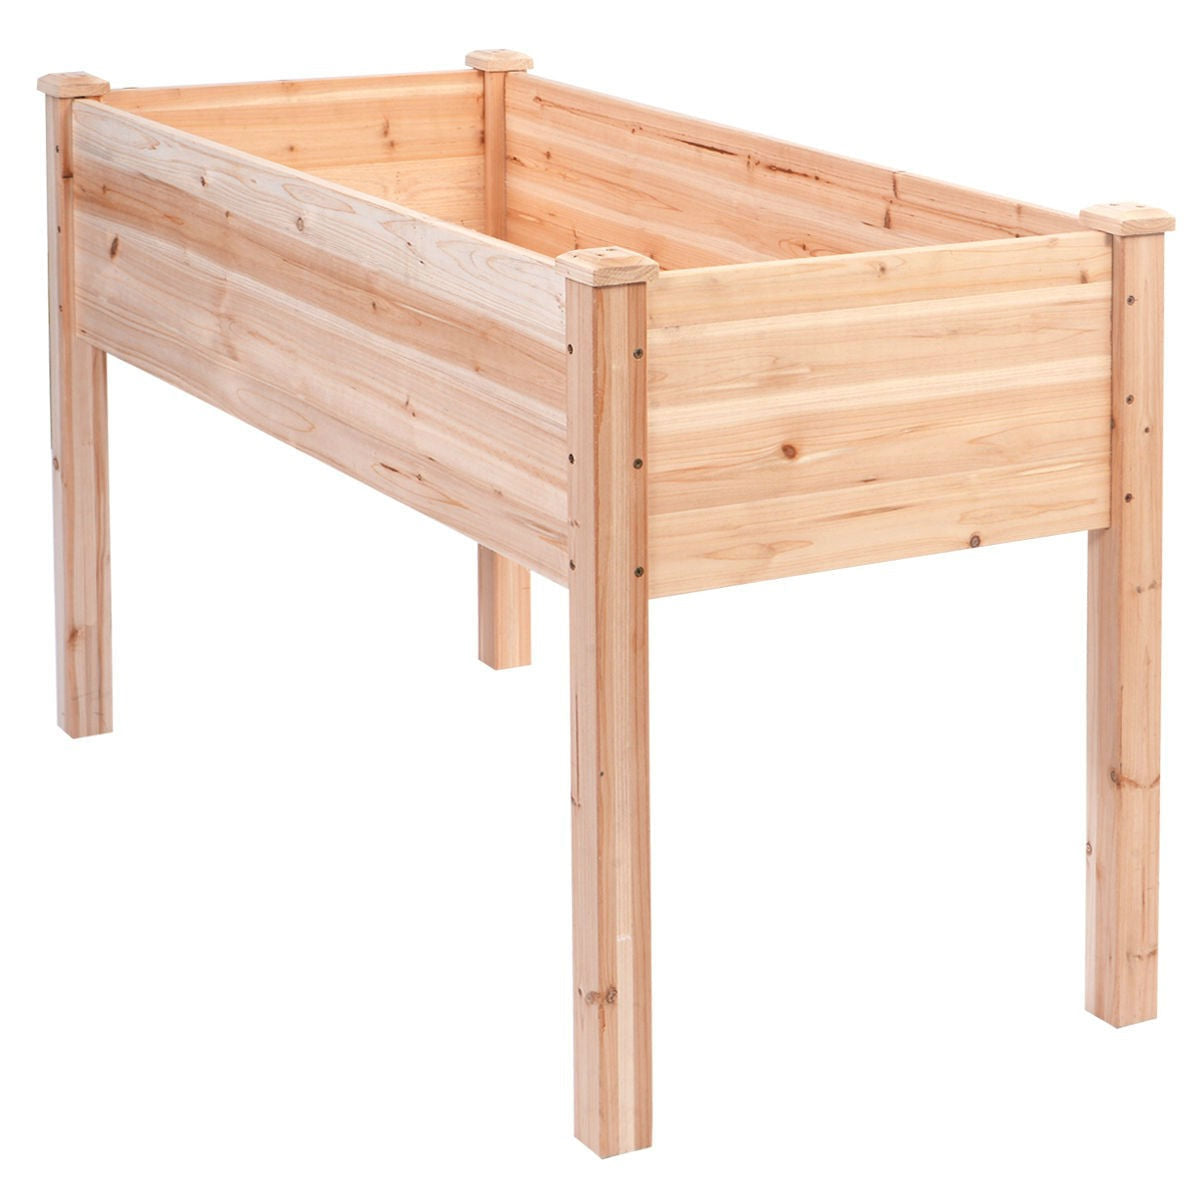 Outdoor > Gardening > Planters - Solid Wood Cedar 30-inch High Raised Garden Bed Planter Box